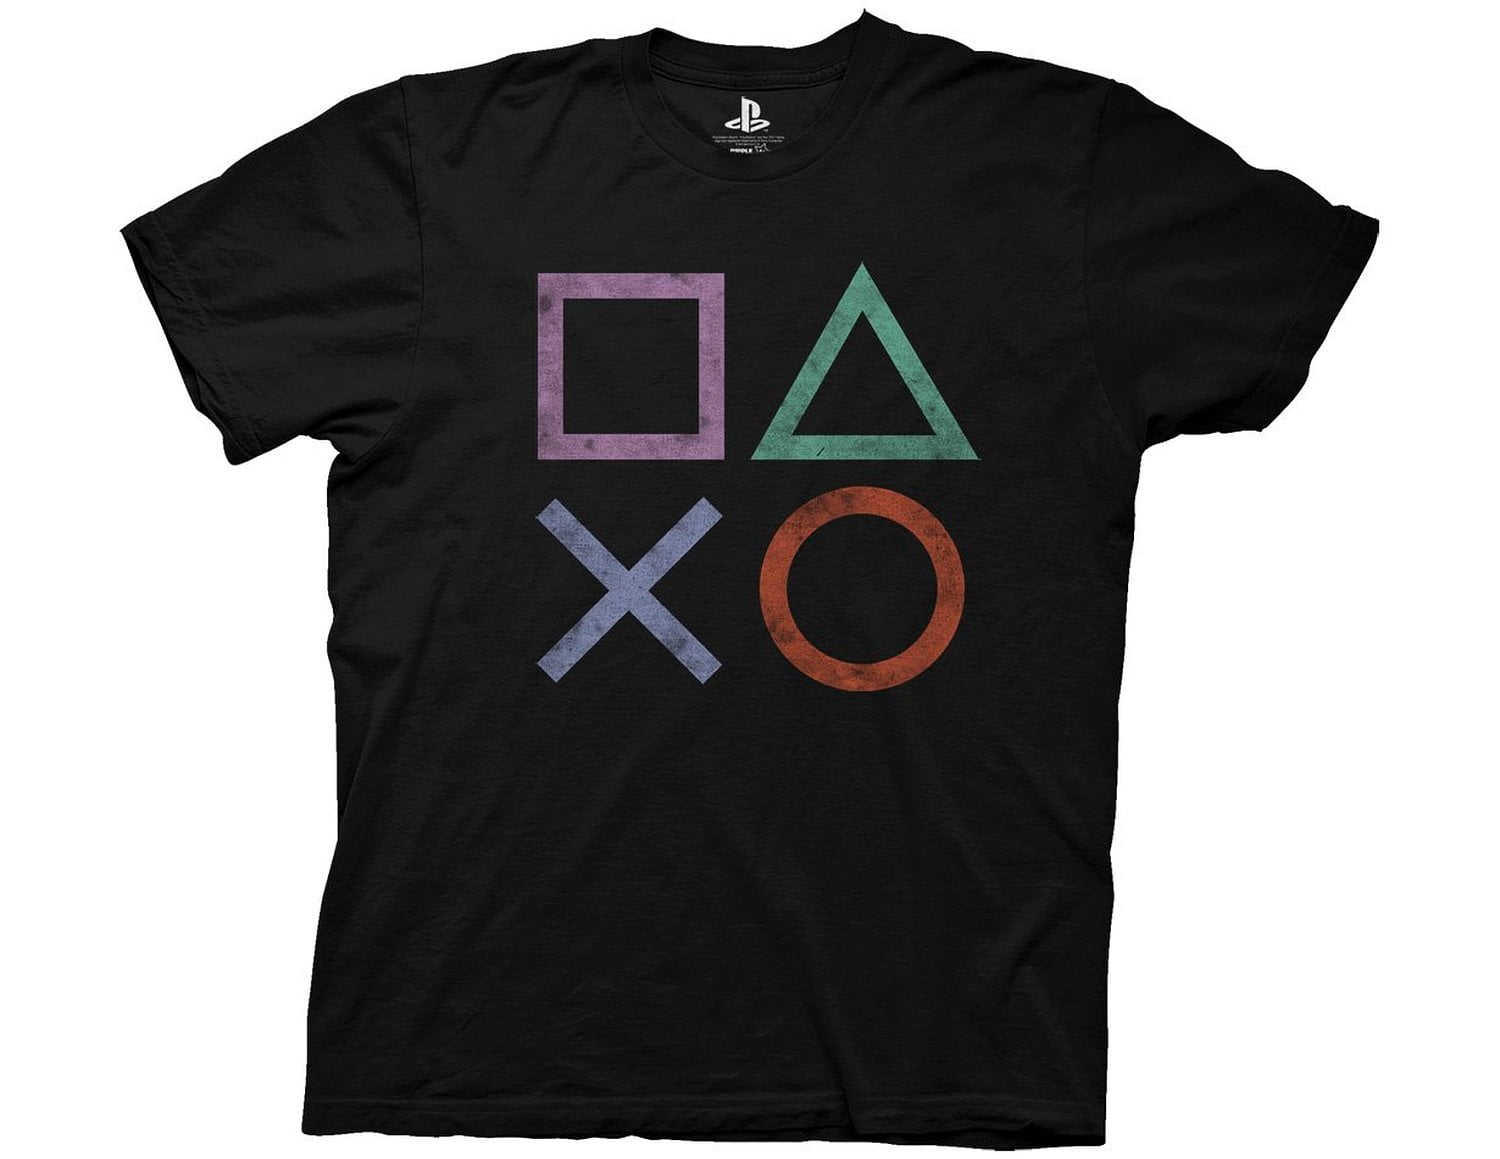 PlayStation - Playstation T-Shirt - Vintage Icons - Walmart.com ...